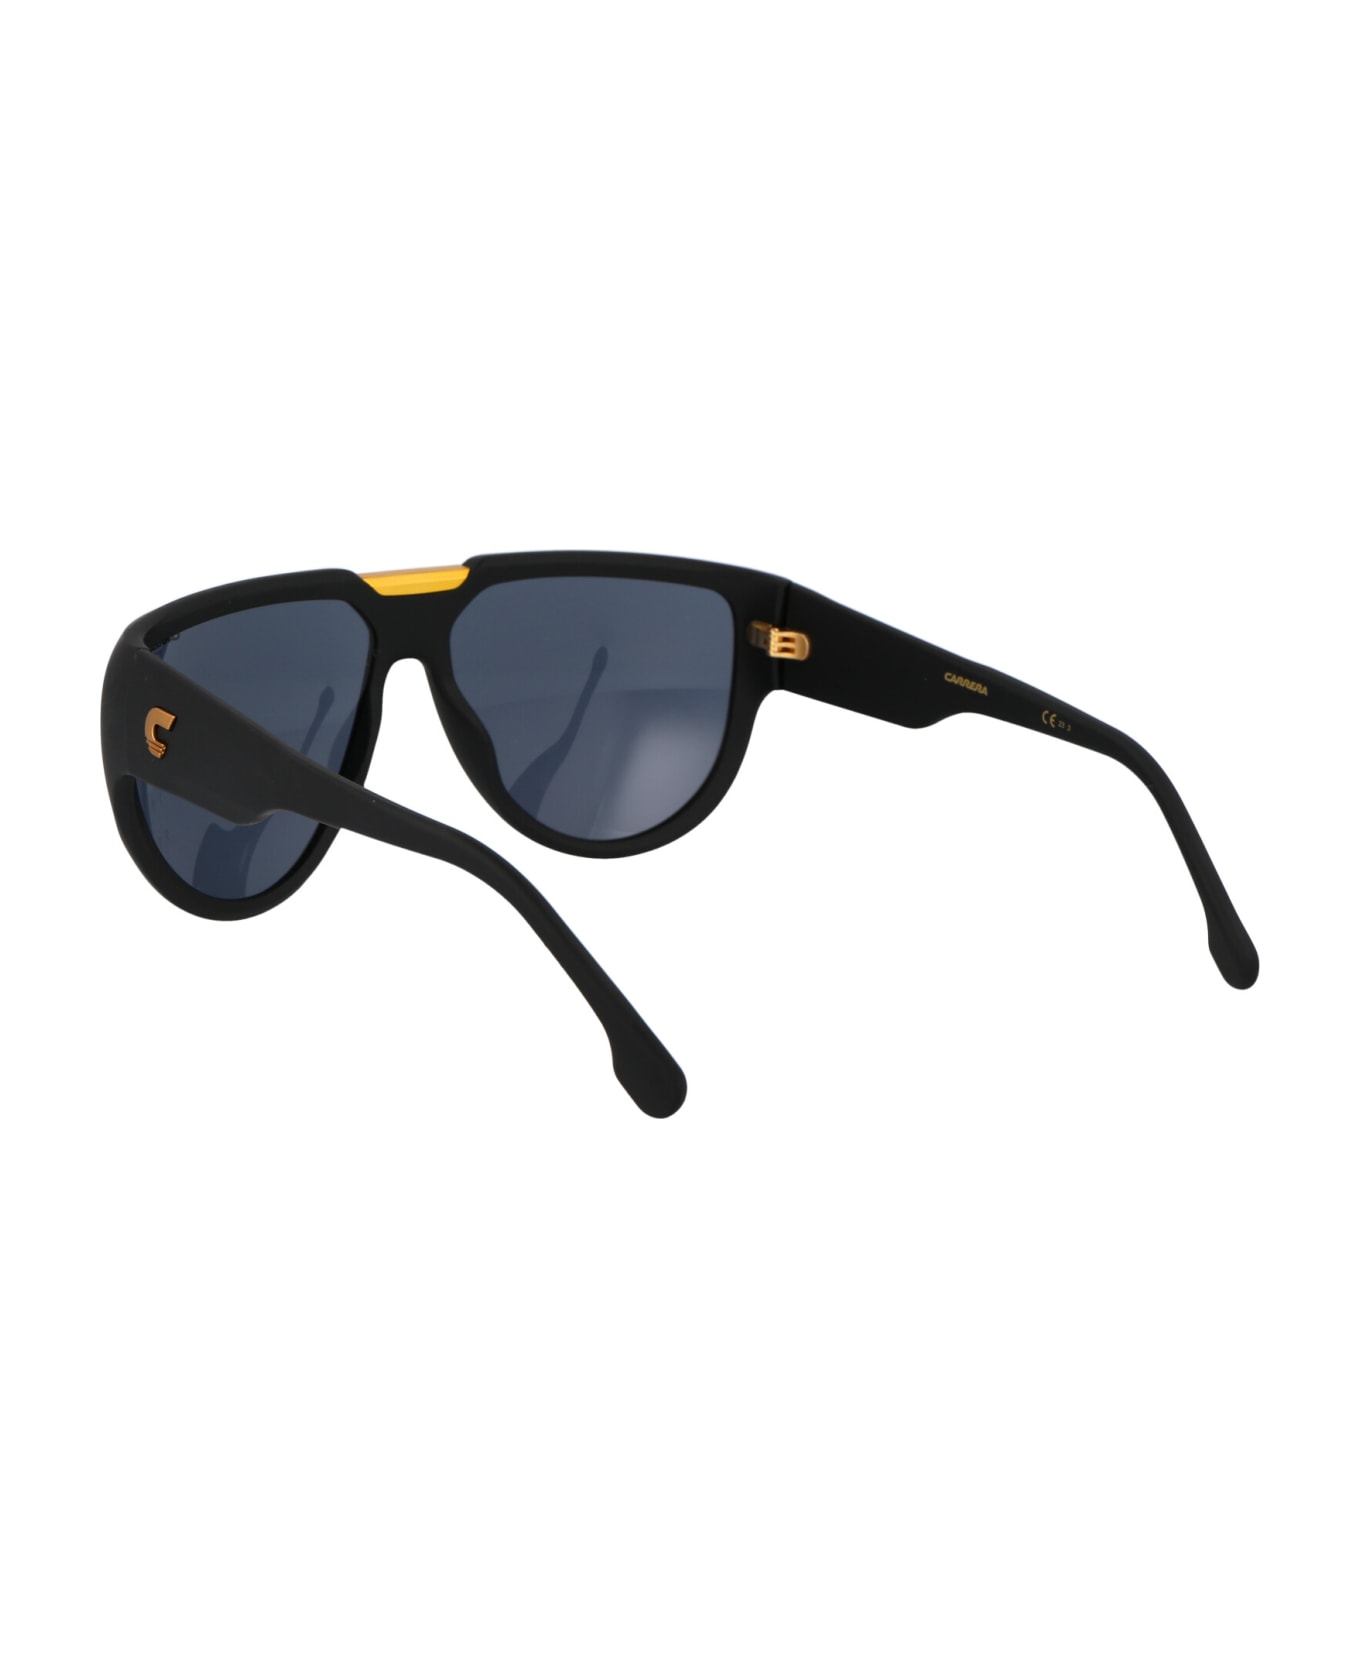 Carrera Flaglab 13 Sunglasses - 003IR MATTE BLACK